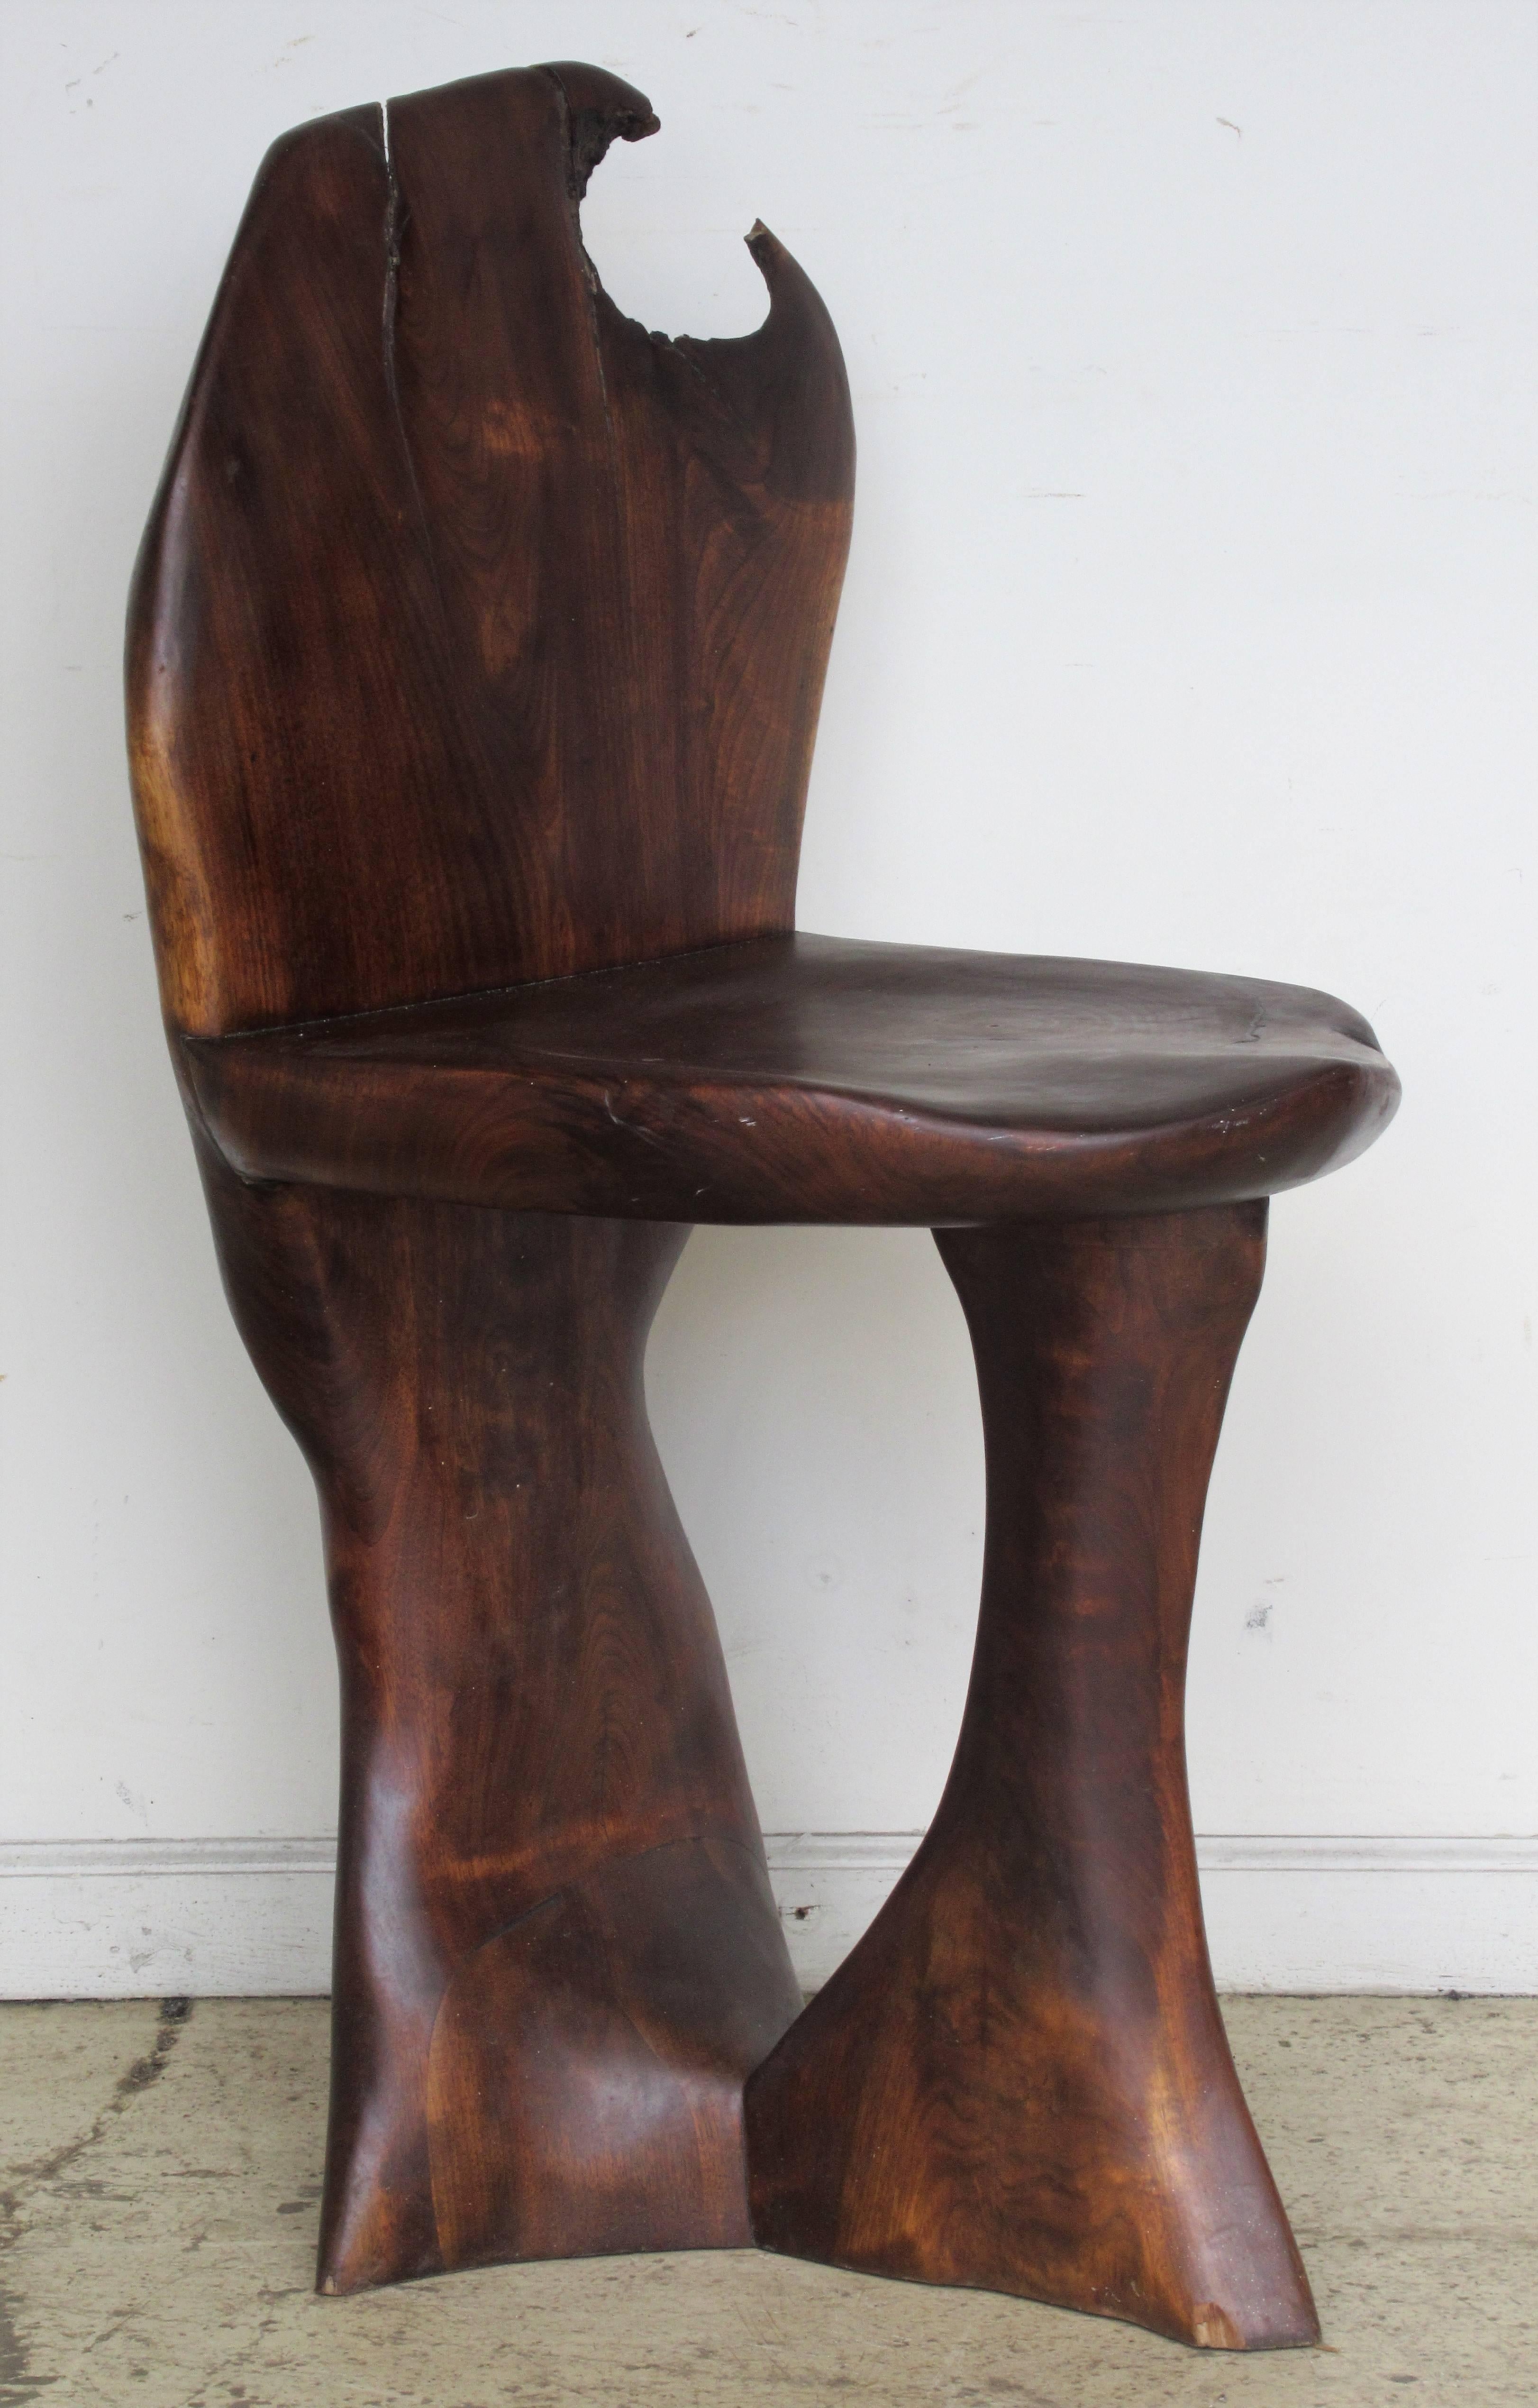 1970s American Craft Movement Organic Modern Chair 1